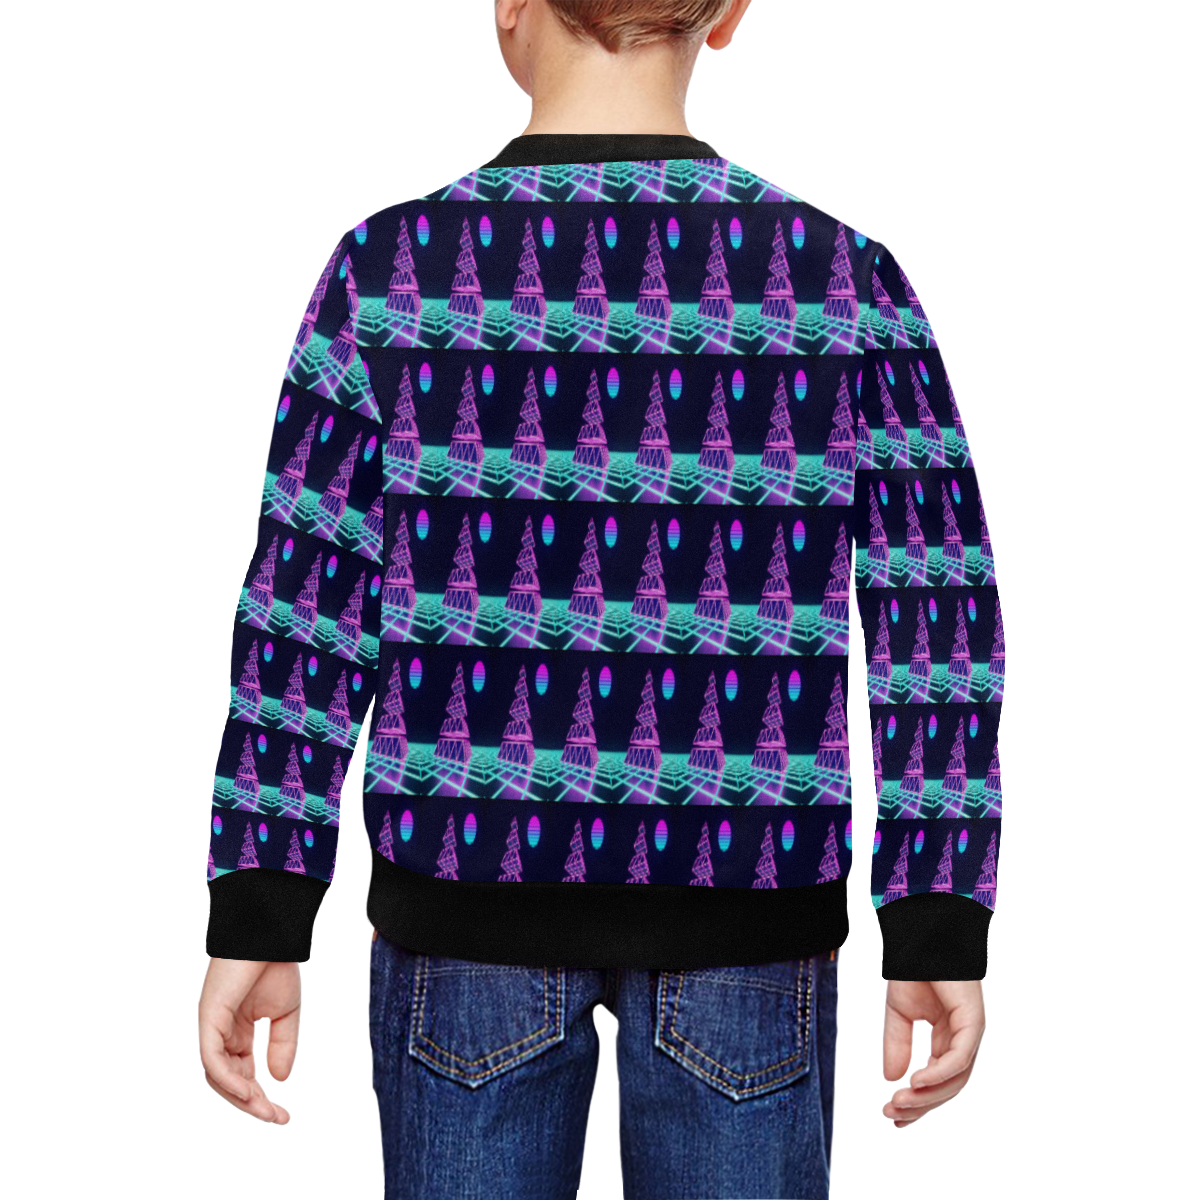 Glow moon All Over Print Crewneck Sweatshirt for Kids (Model H29)